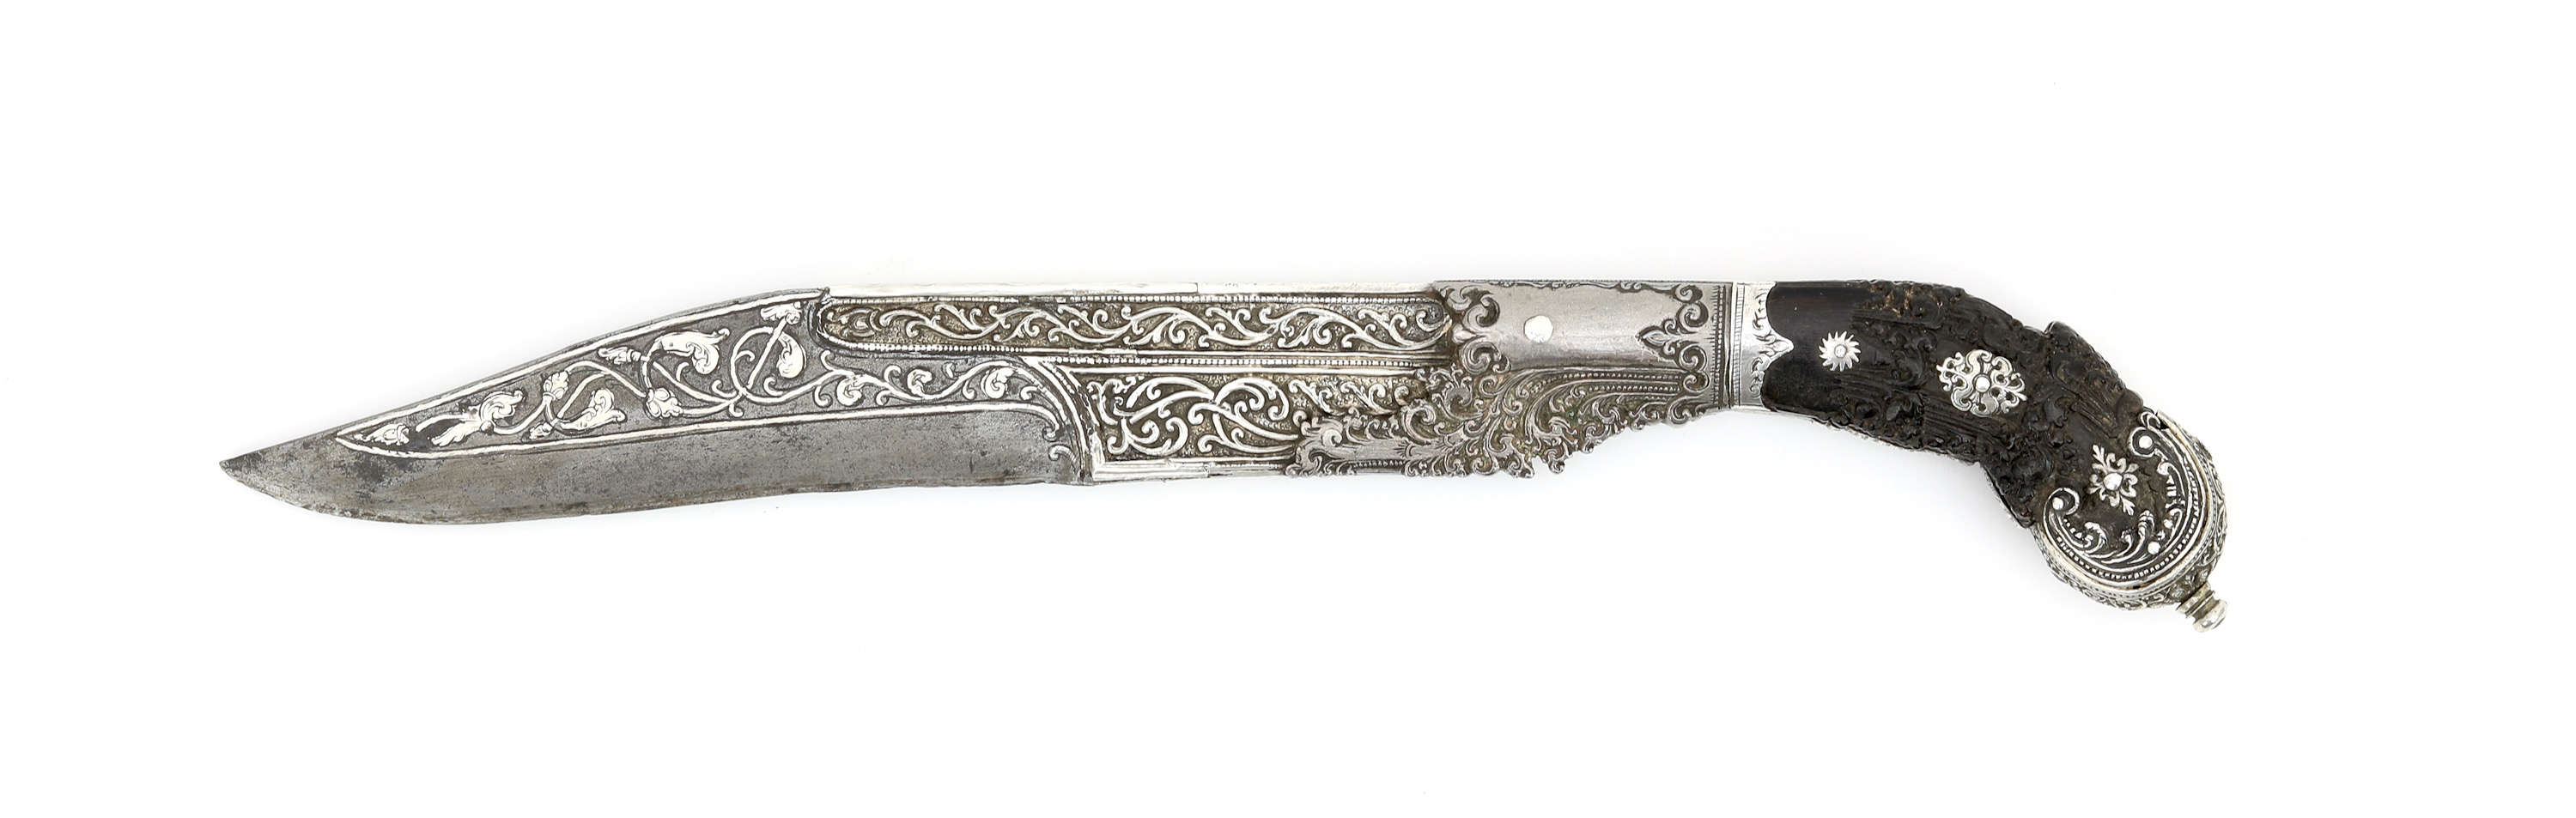 Antique Sinhalese knife